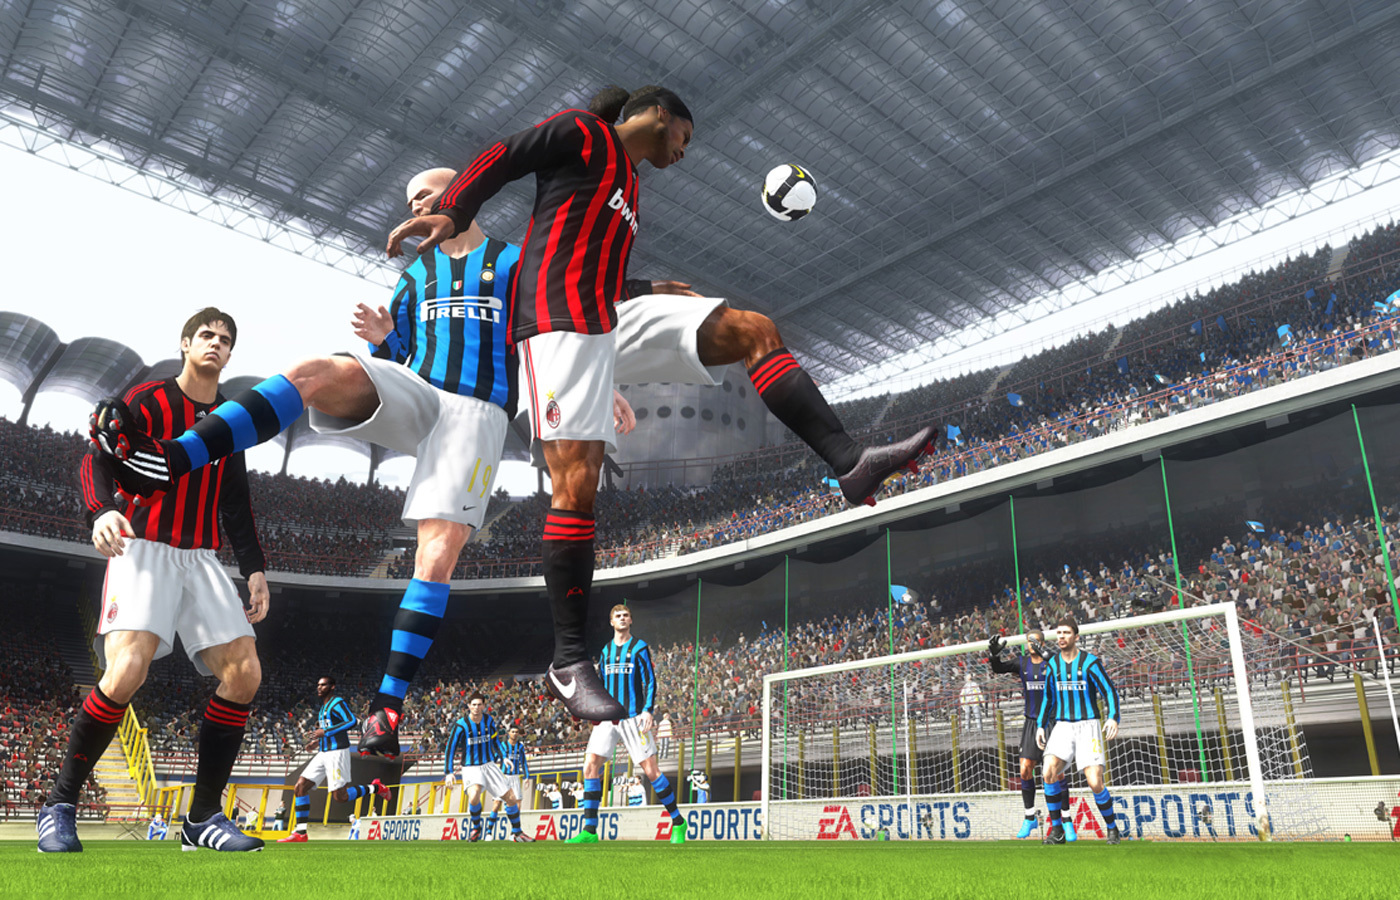 Download & Play Football Strike: Online Soccer on PC & Mac (Emulator)